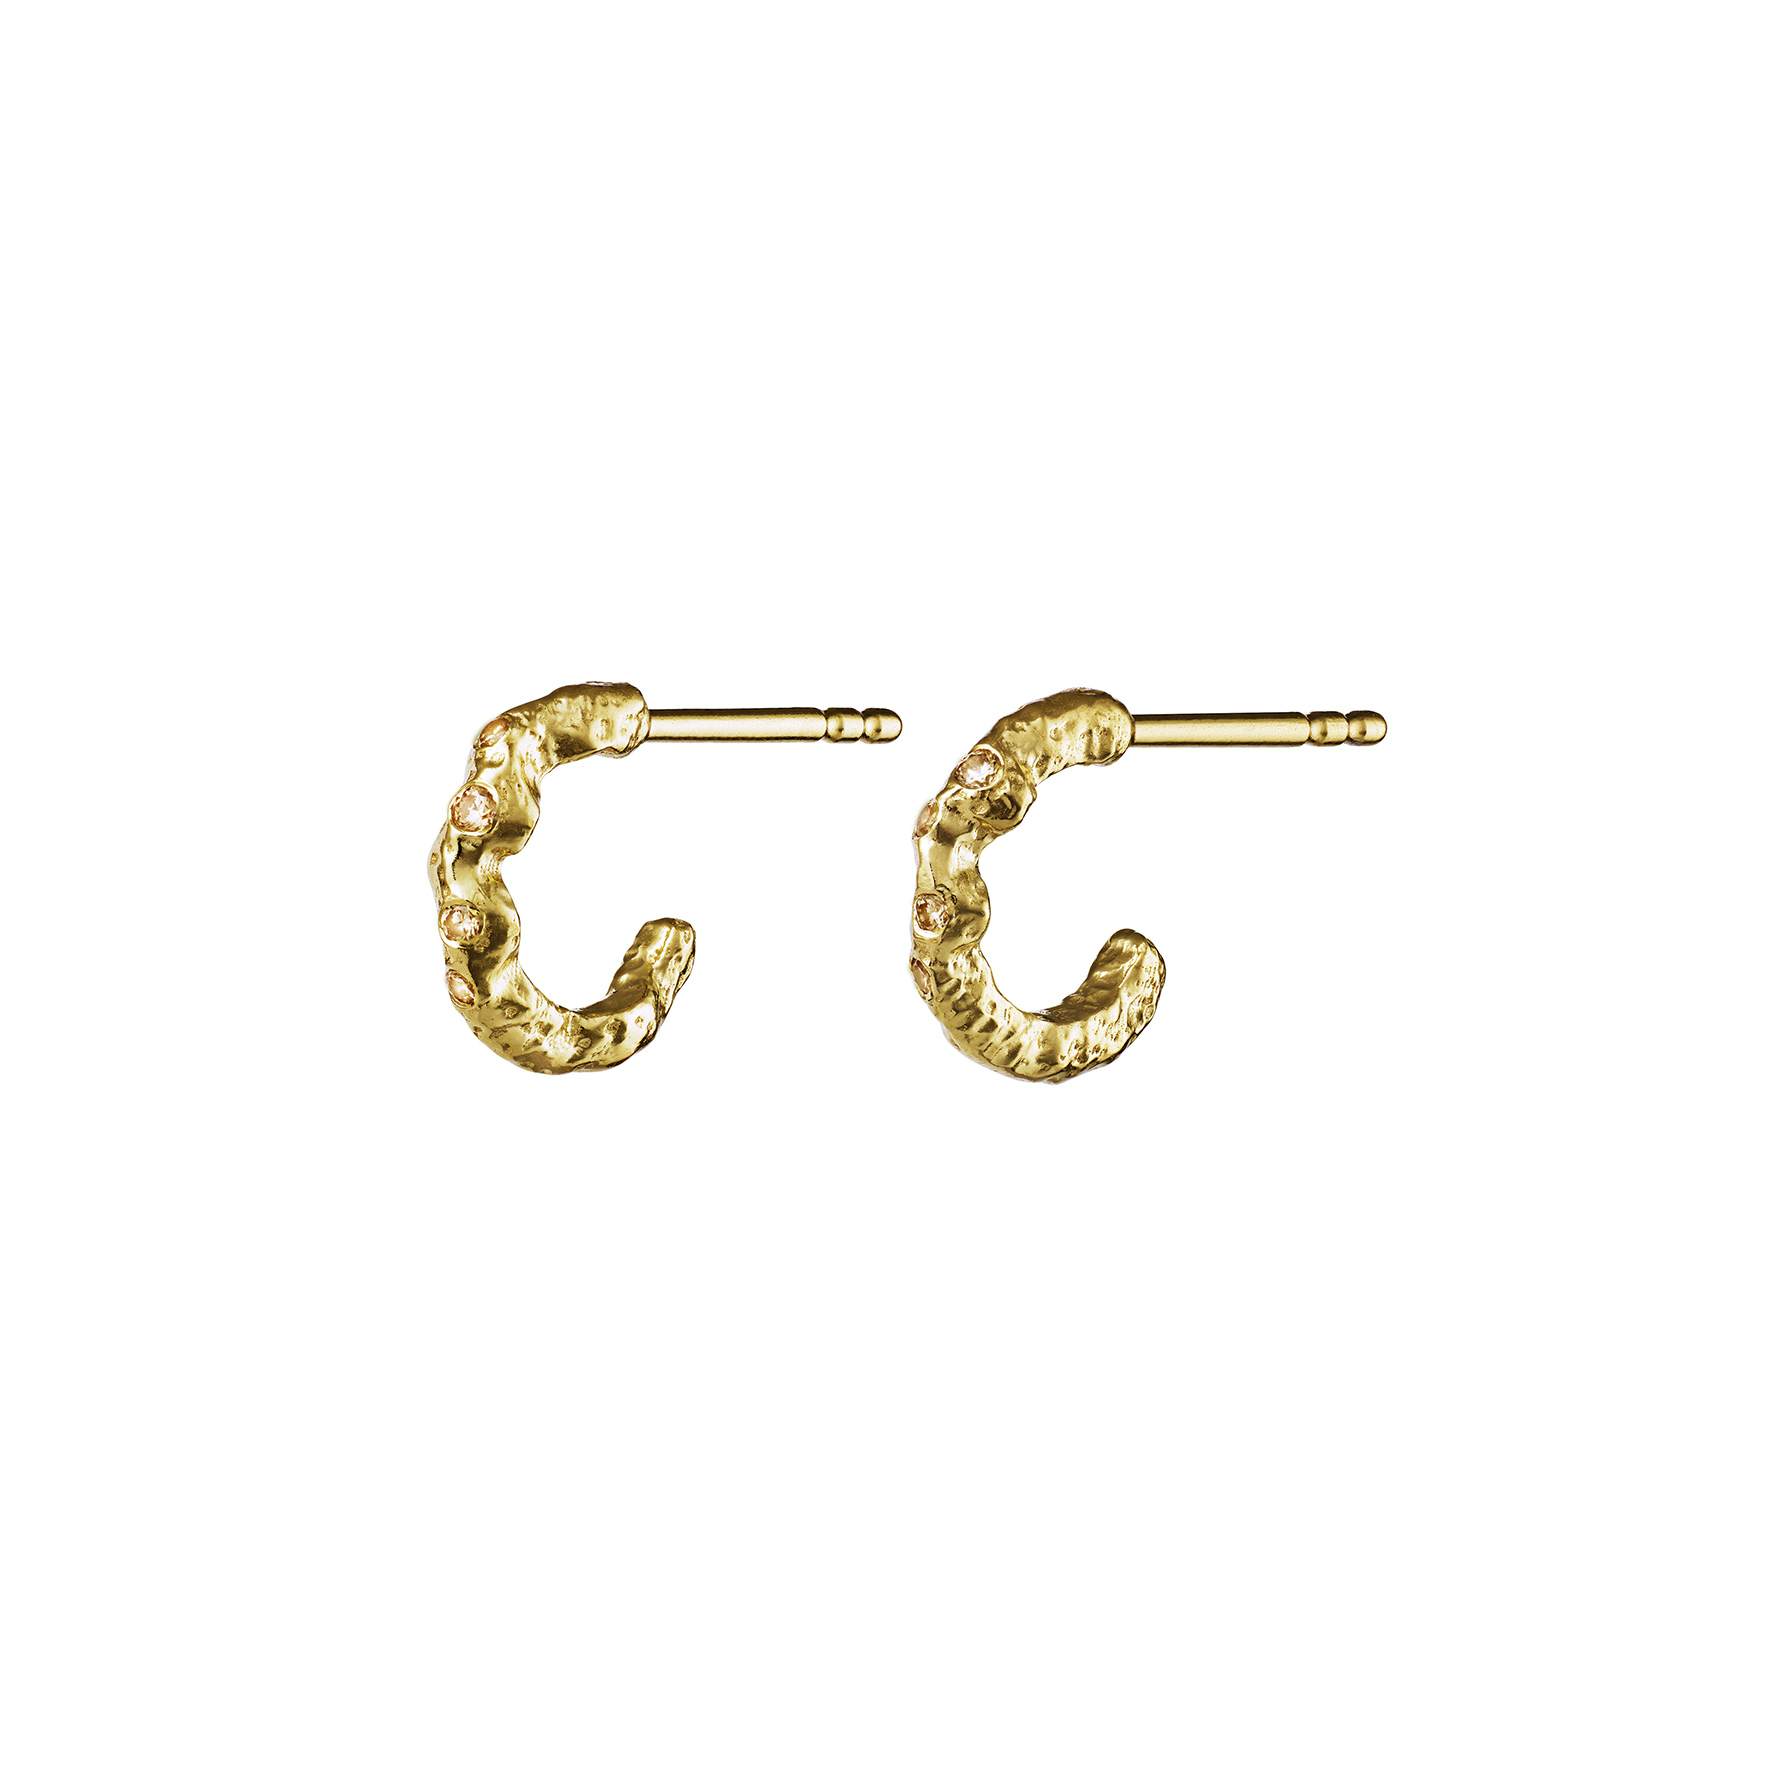 Janine Petite Earrings von Maanesten in Vergoldet-Silber Sterling 925